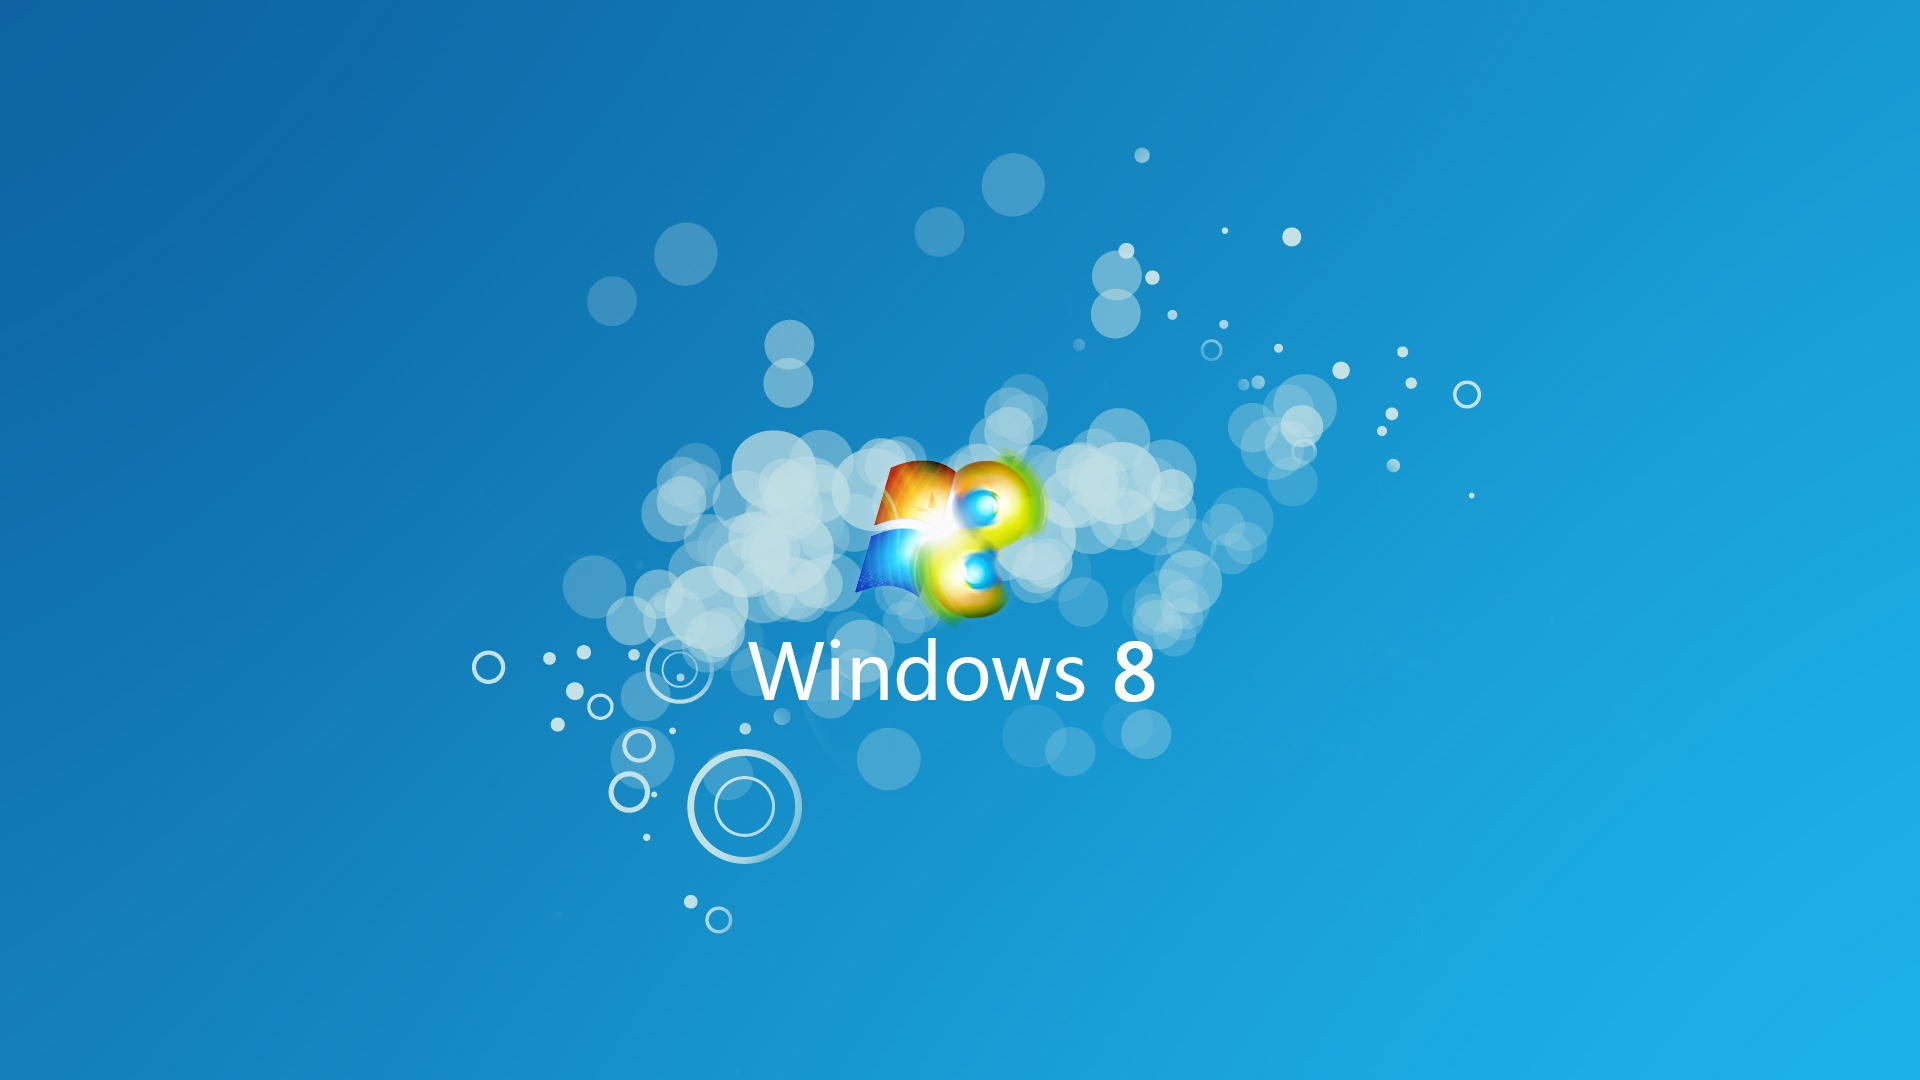 Windows 8 主题壁纸 (一)9 - 1920x1080